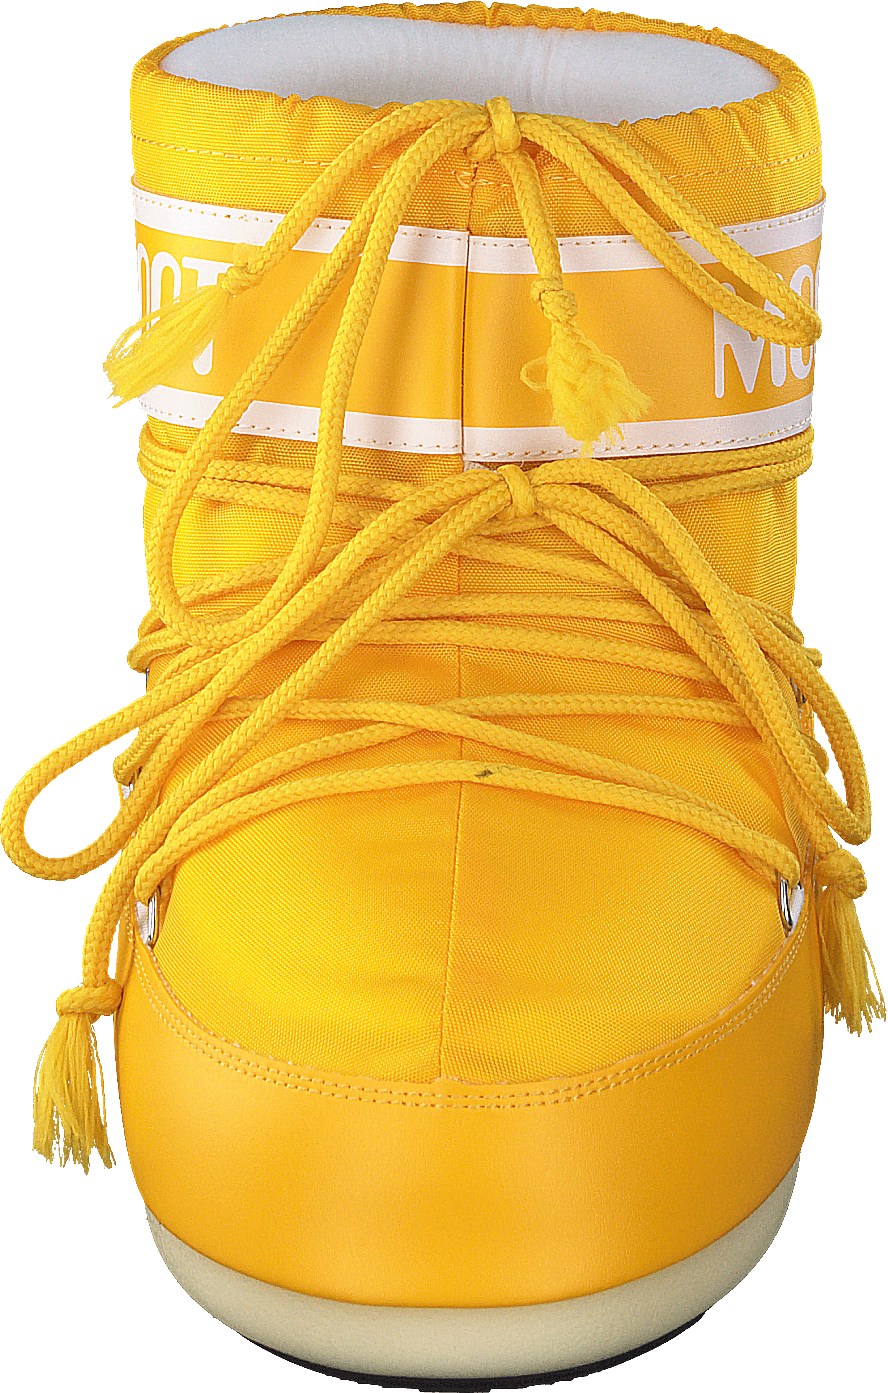 Moon Boot Yellow